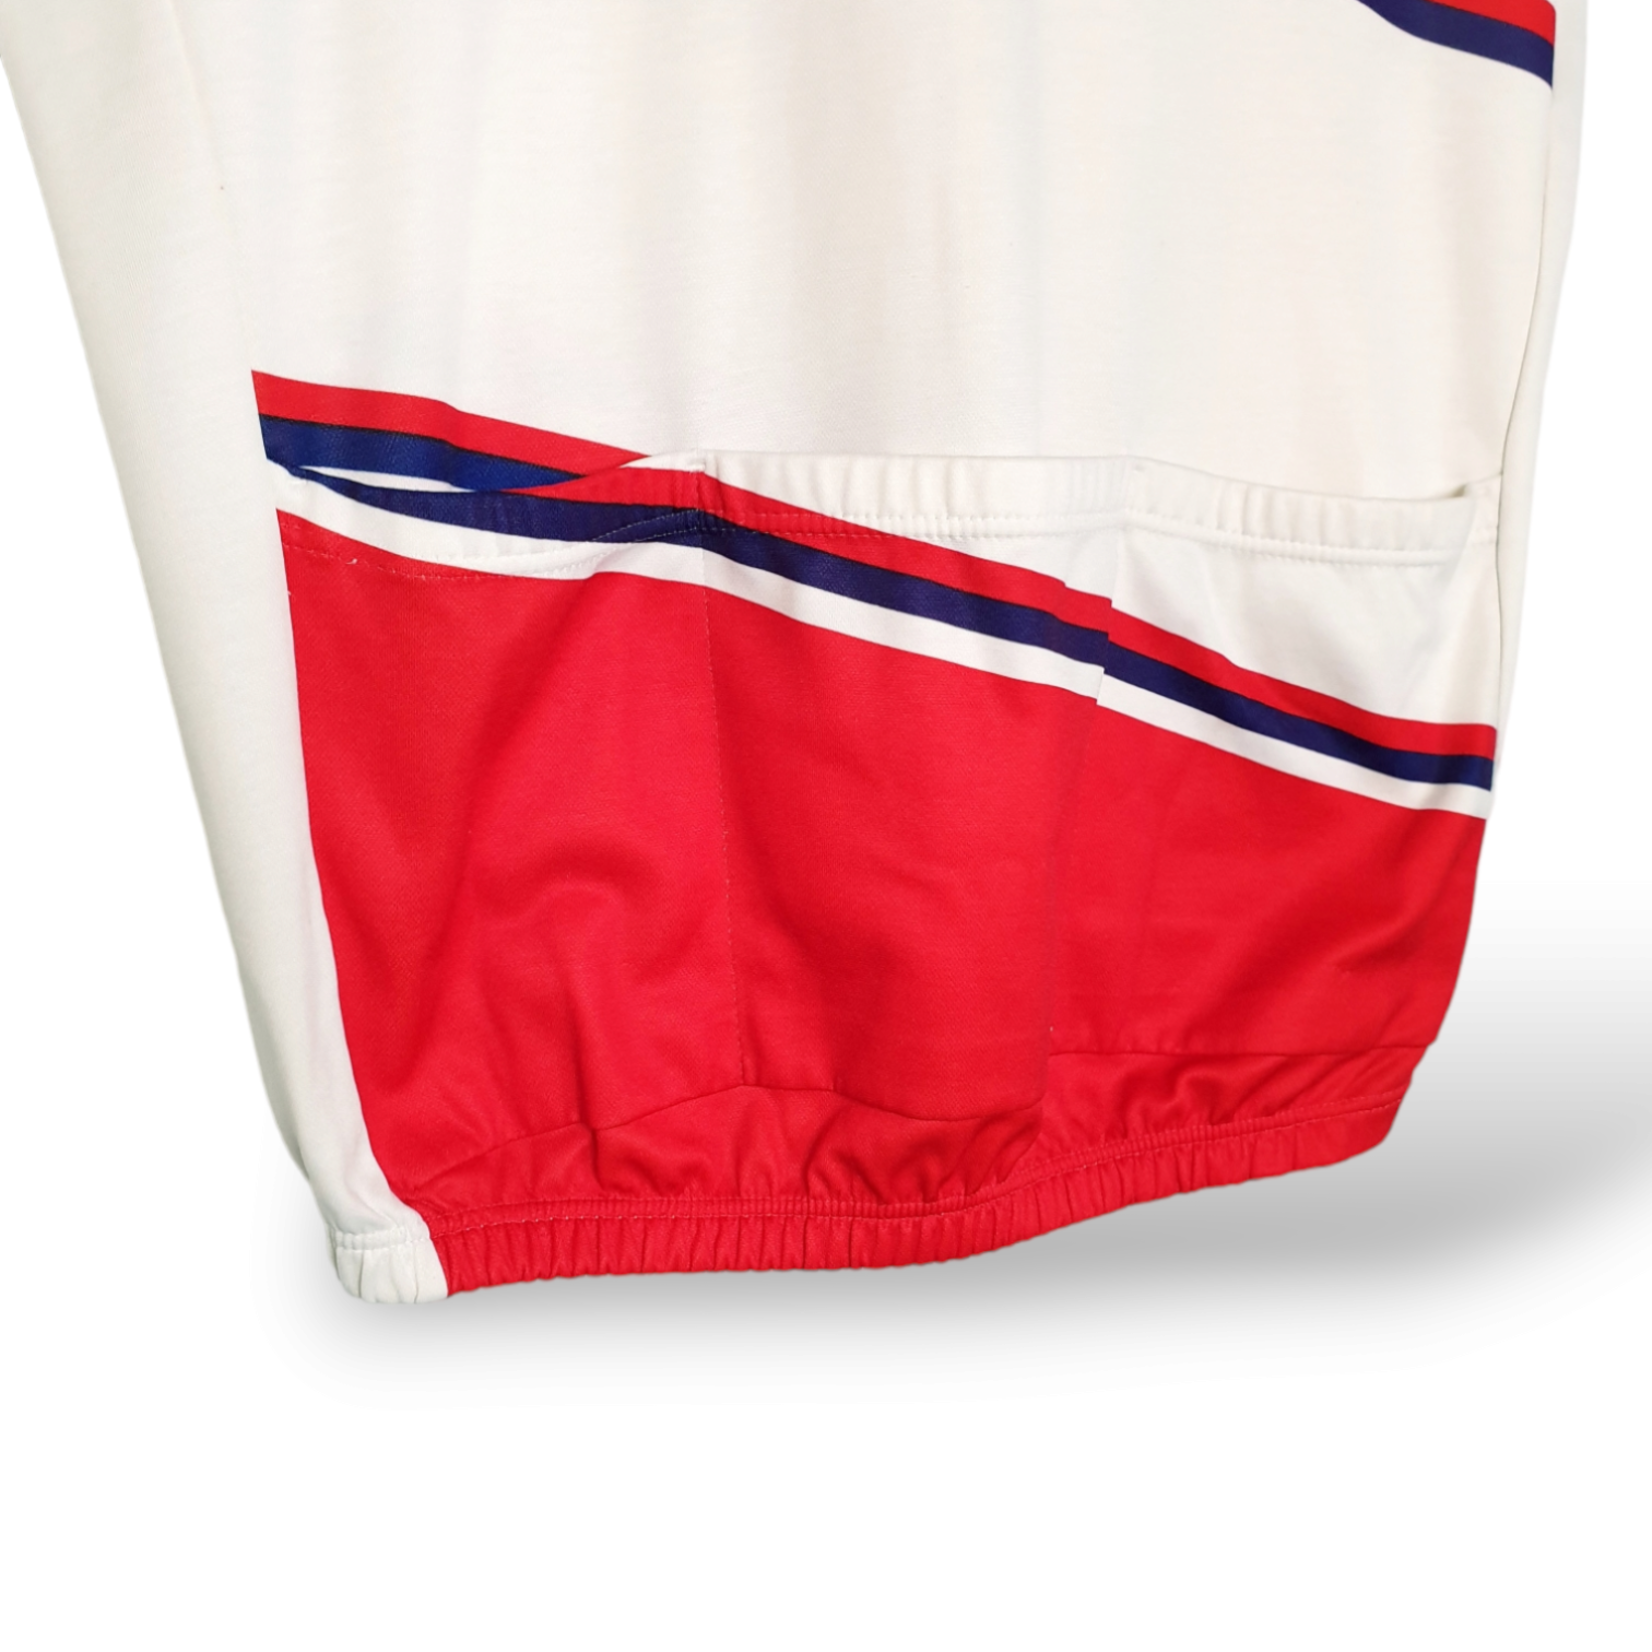 Original Pinarello Treviso Italy vintage 80s - We Love Sports Shirts